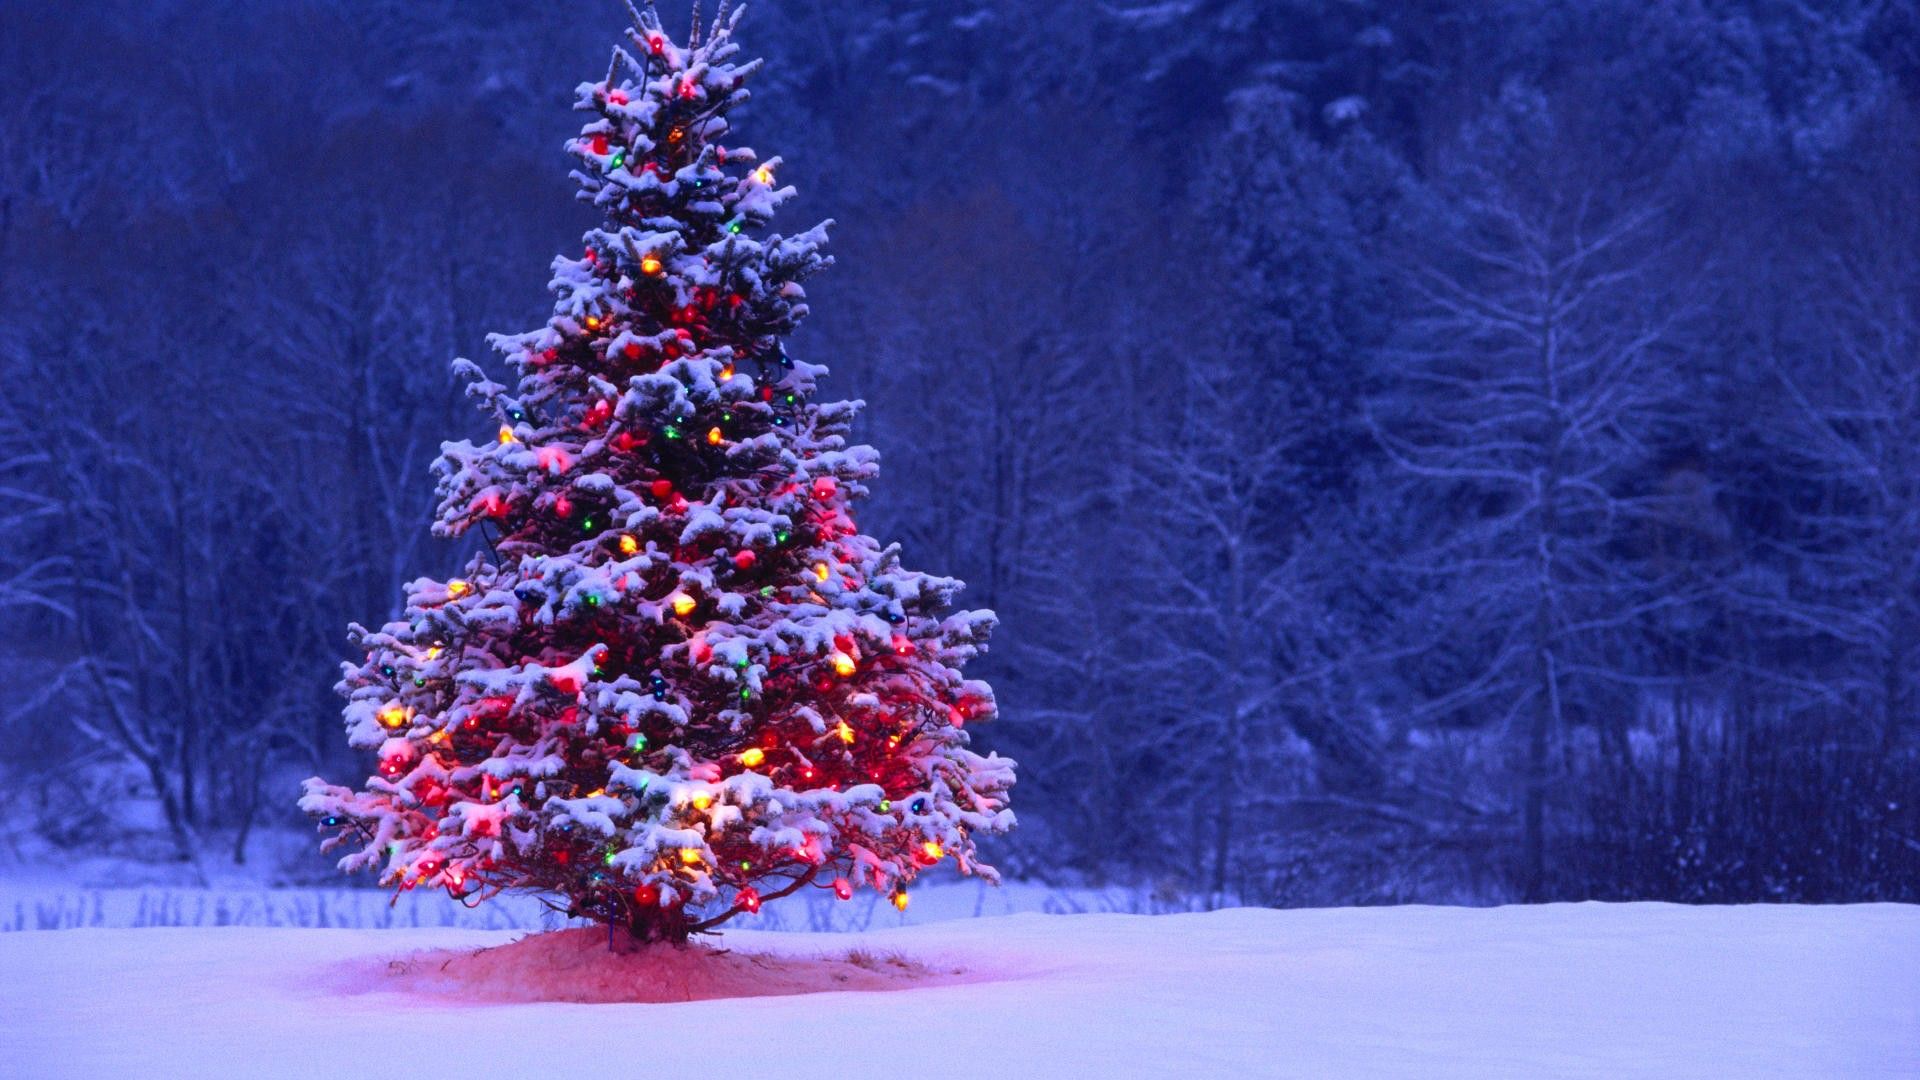 2015 Christmas Desktop Backgrounds | Free Christmas Desktop ...